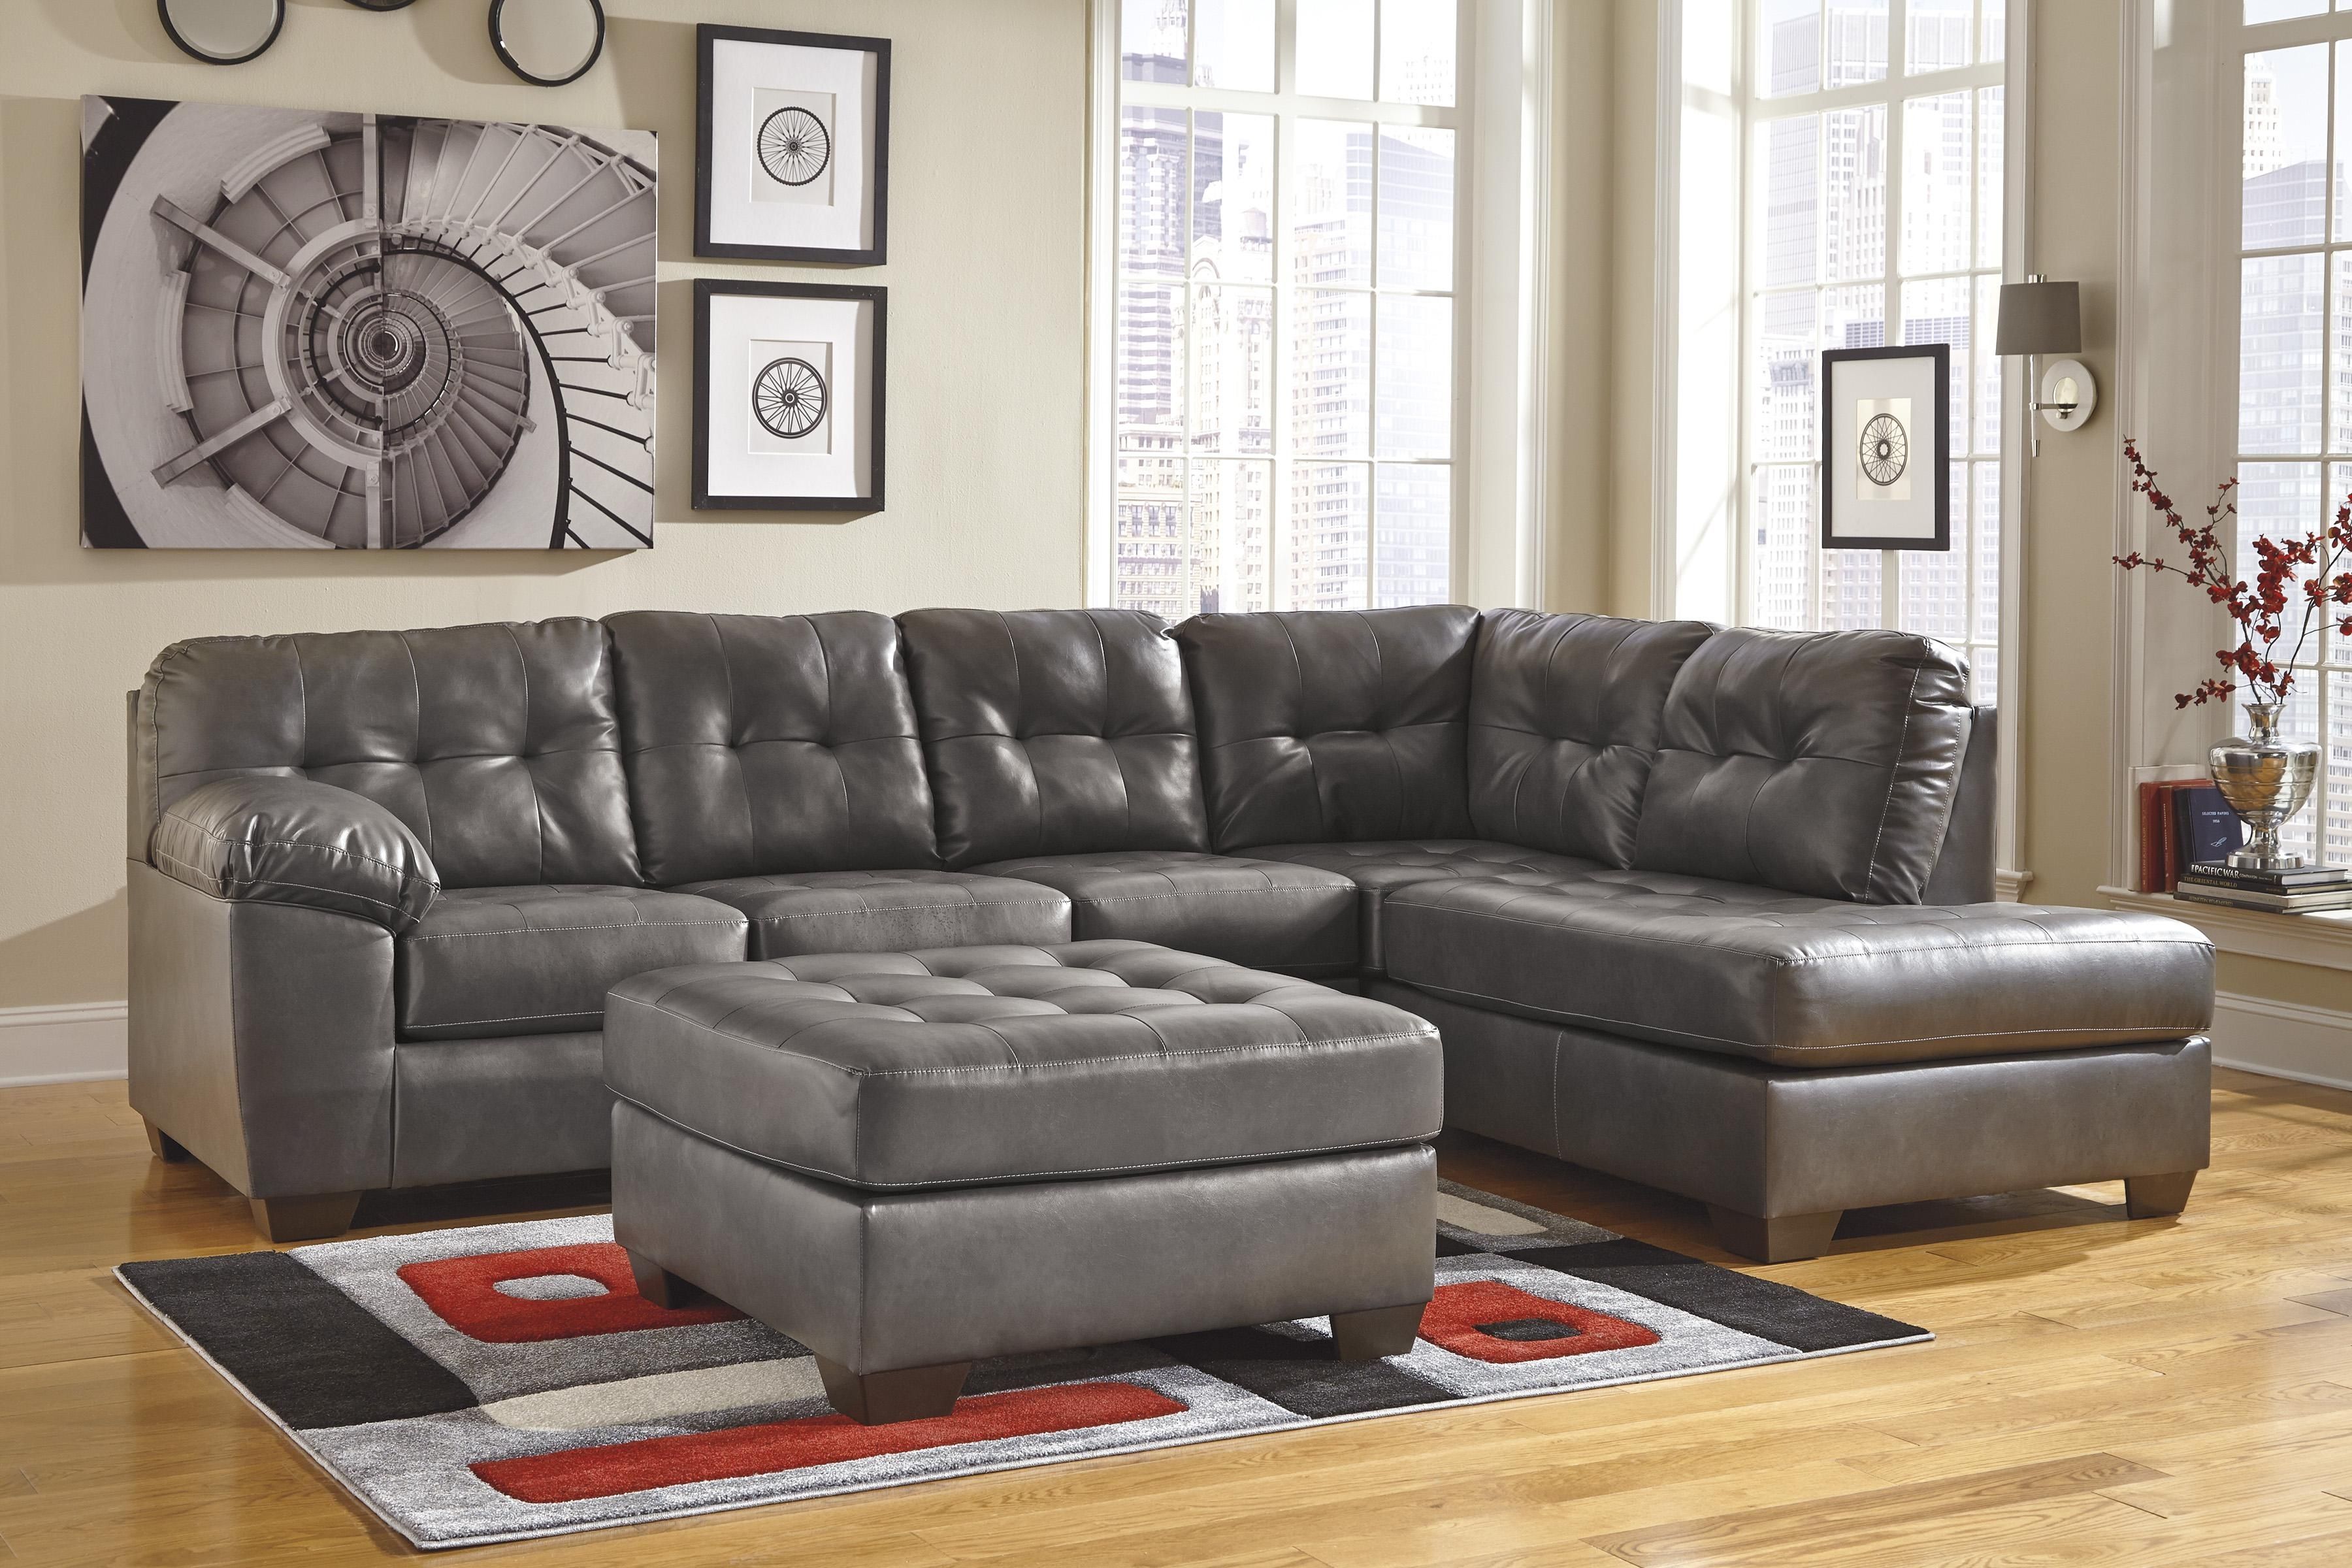 gray leather sleeper sofa sectional